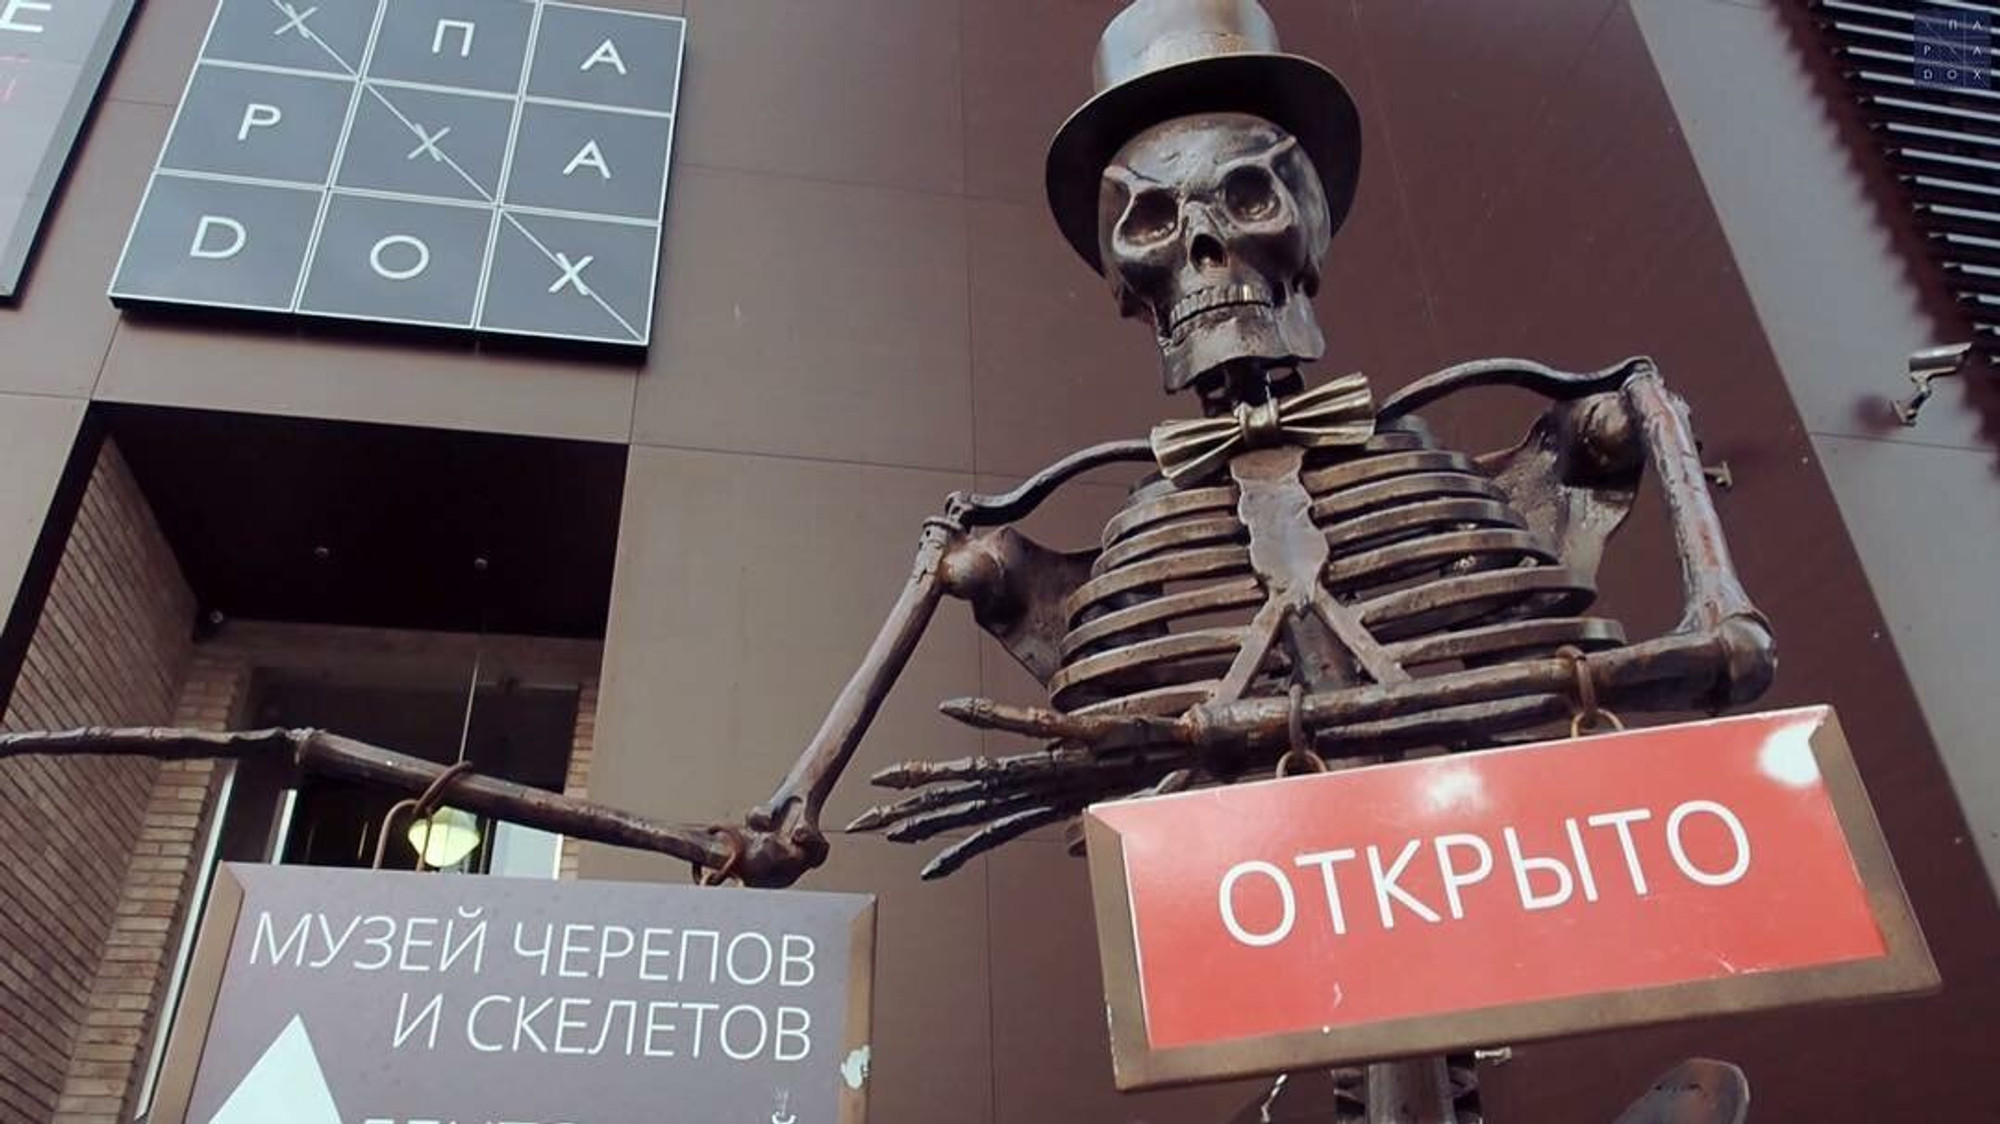 Музей черепов и скелетов (Музей )